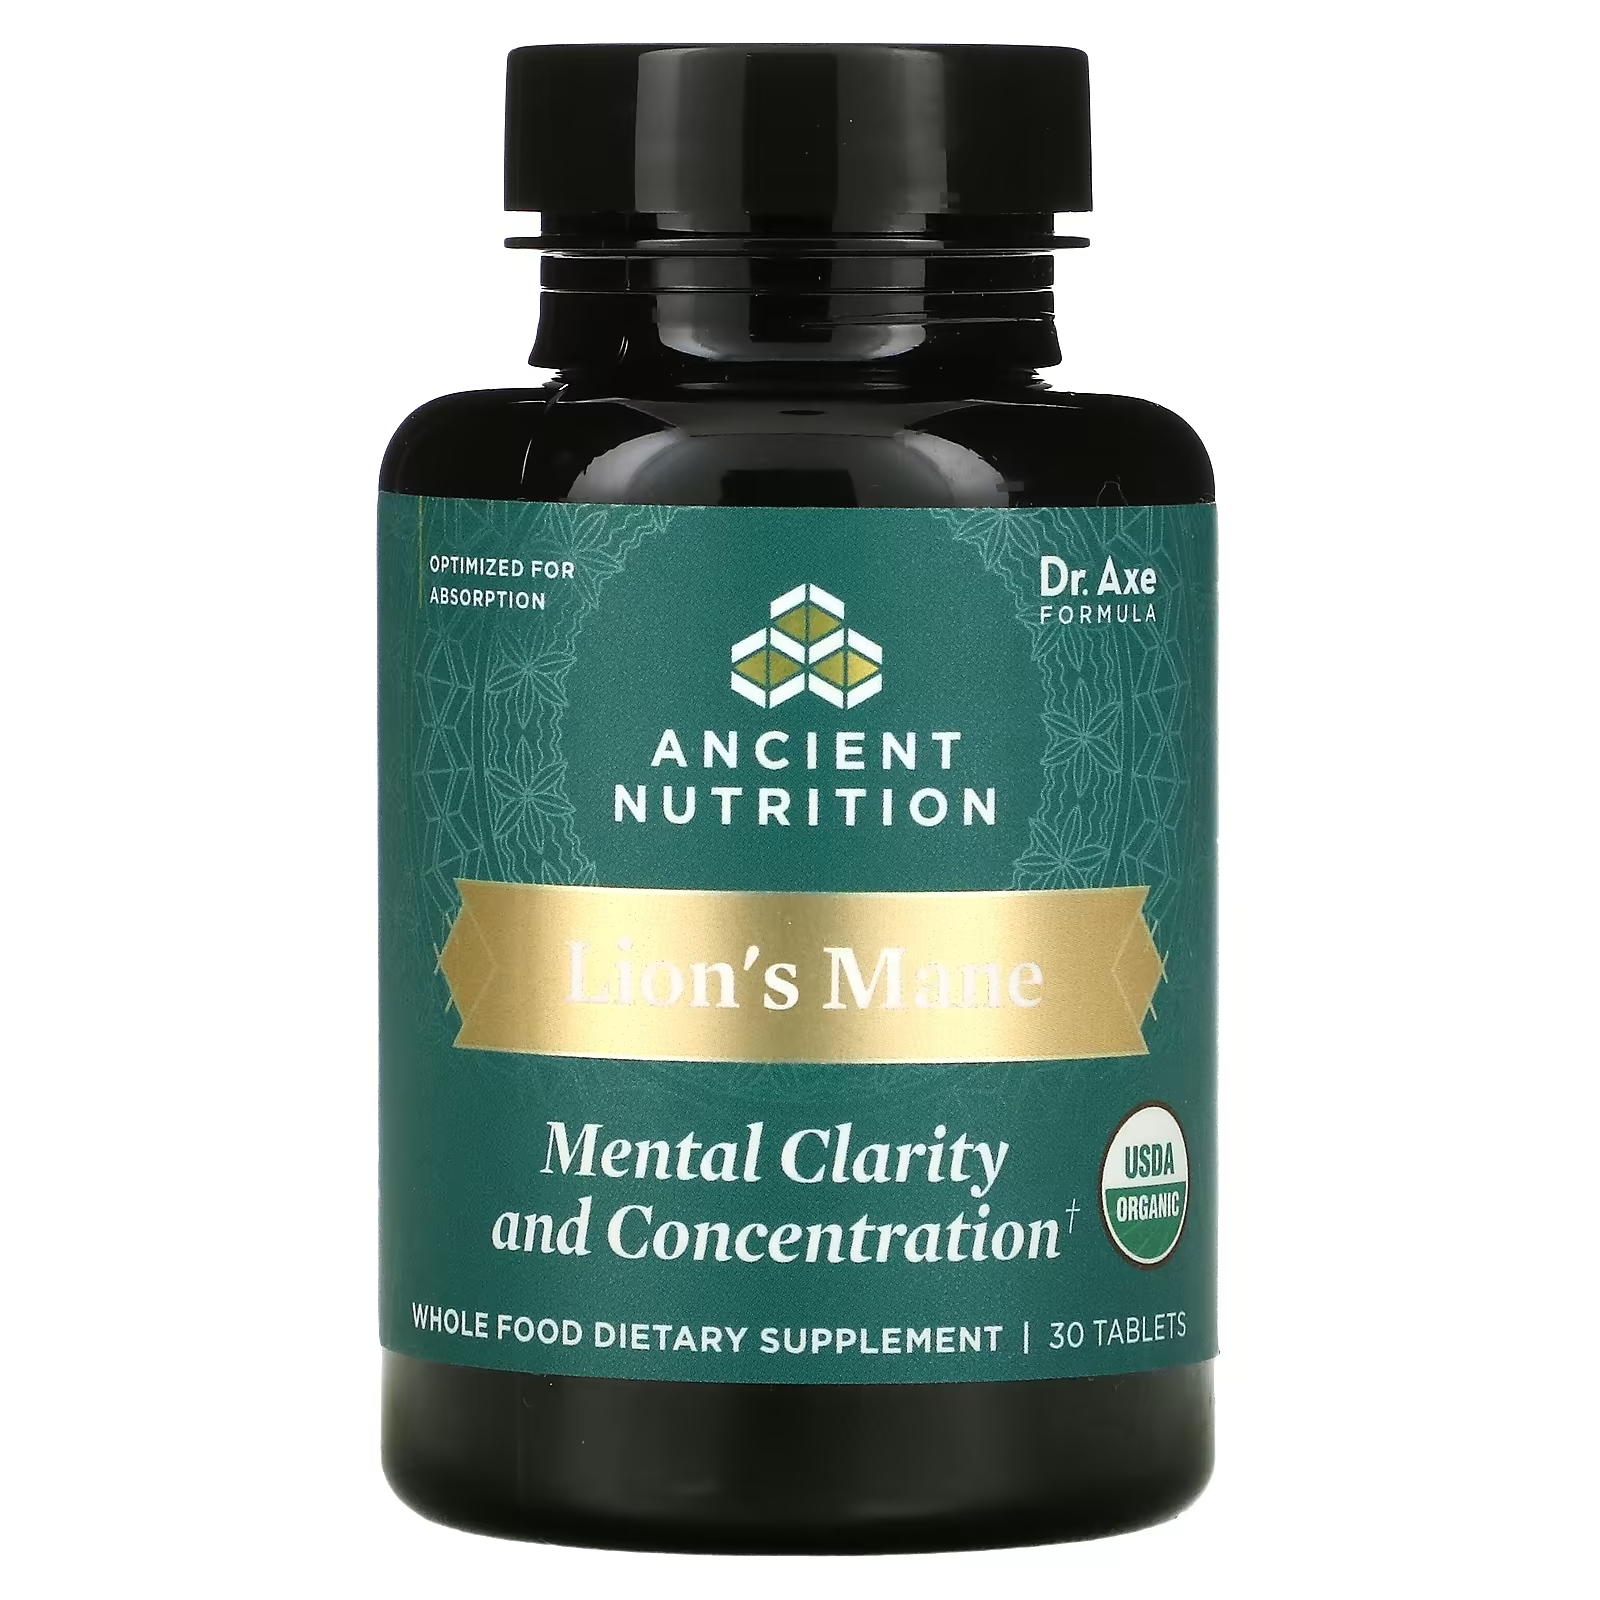 Dr. Axe Ancient Nutrition Lion's Mane ясность ума и концентрация, 30 таблеток